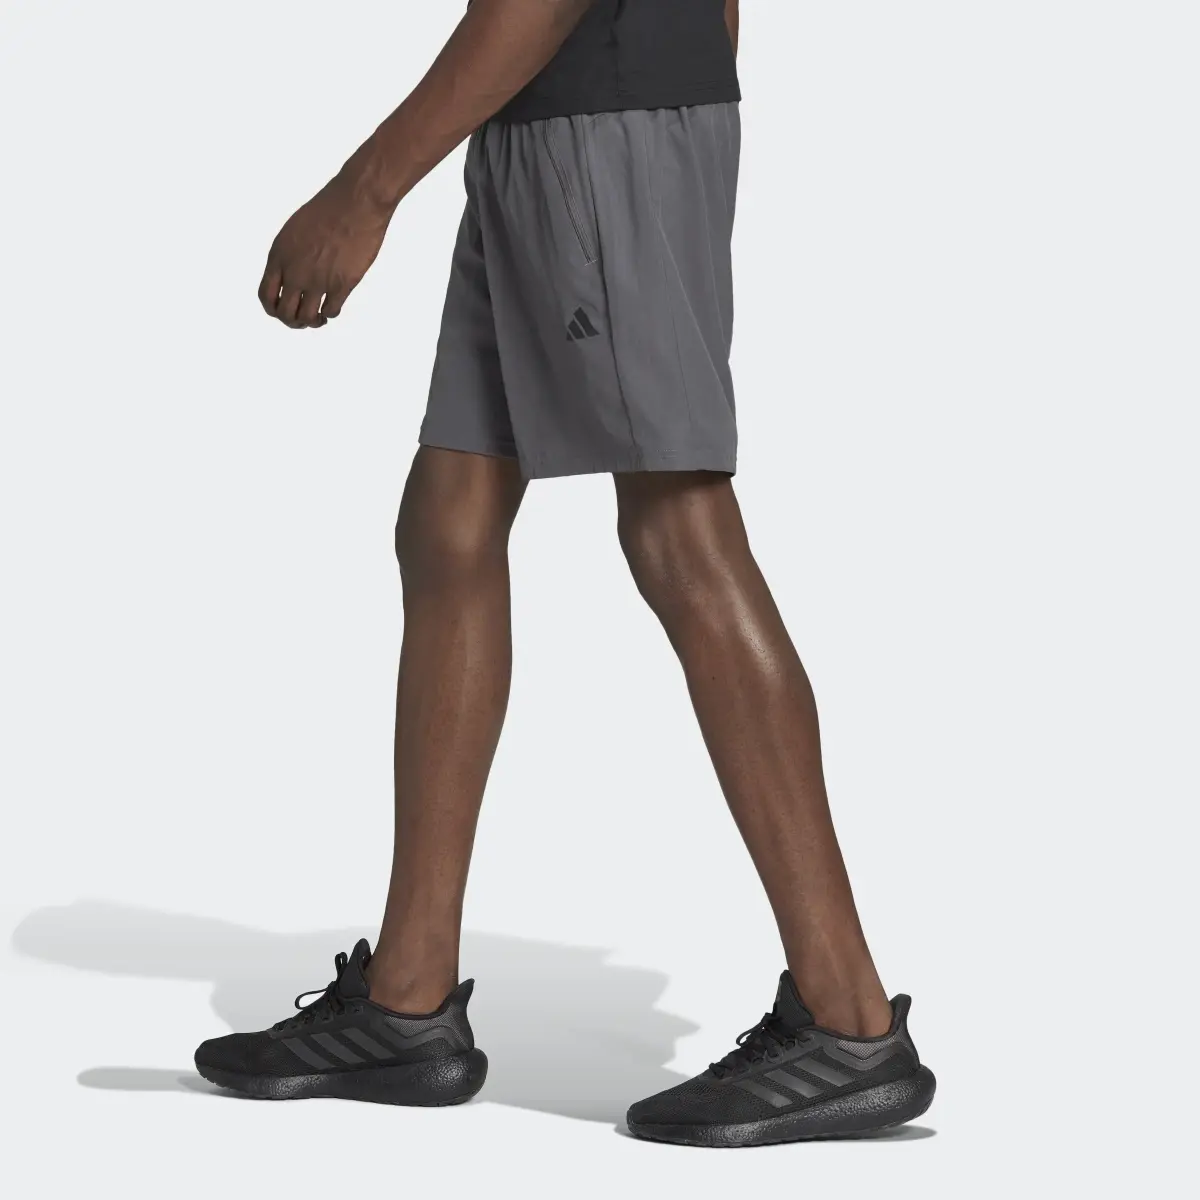 Adidas Train Essentials Woven Training Shorts. 2